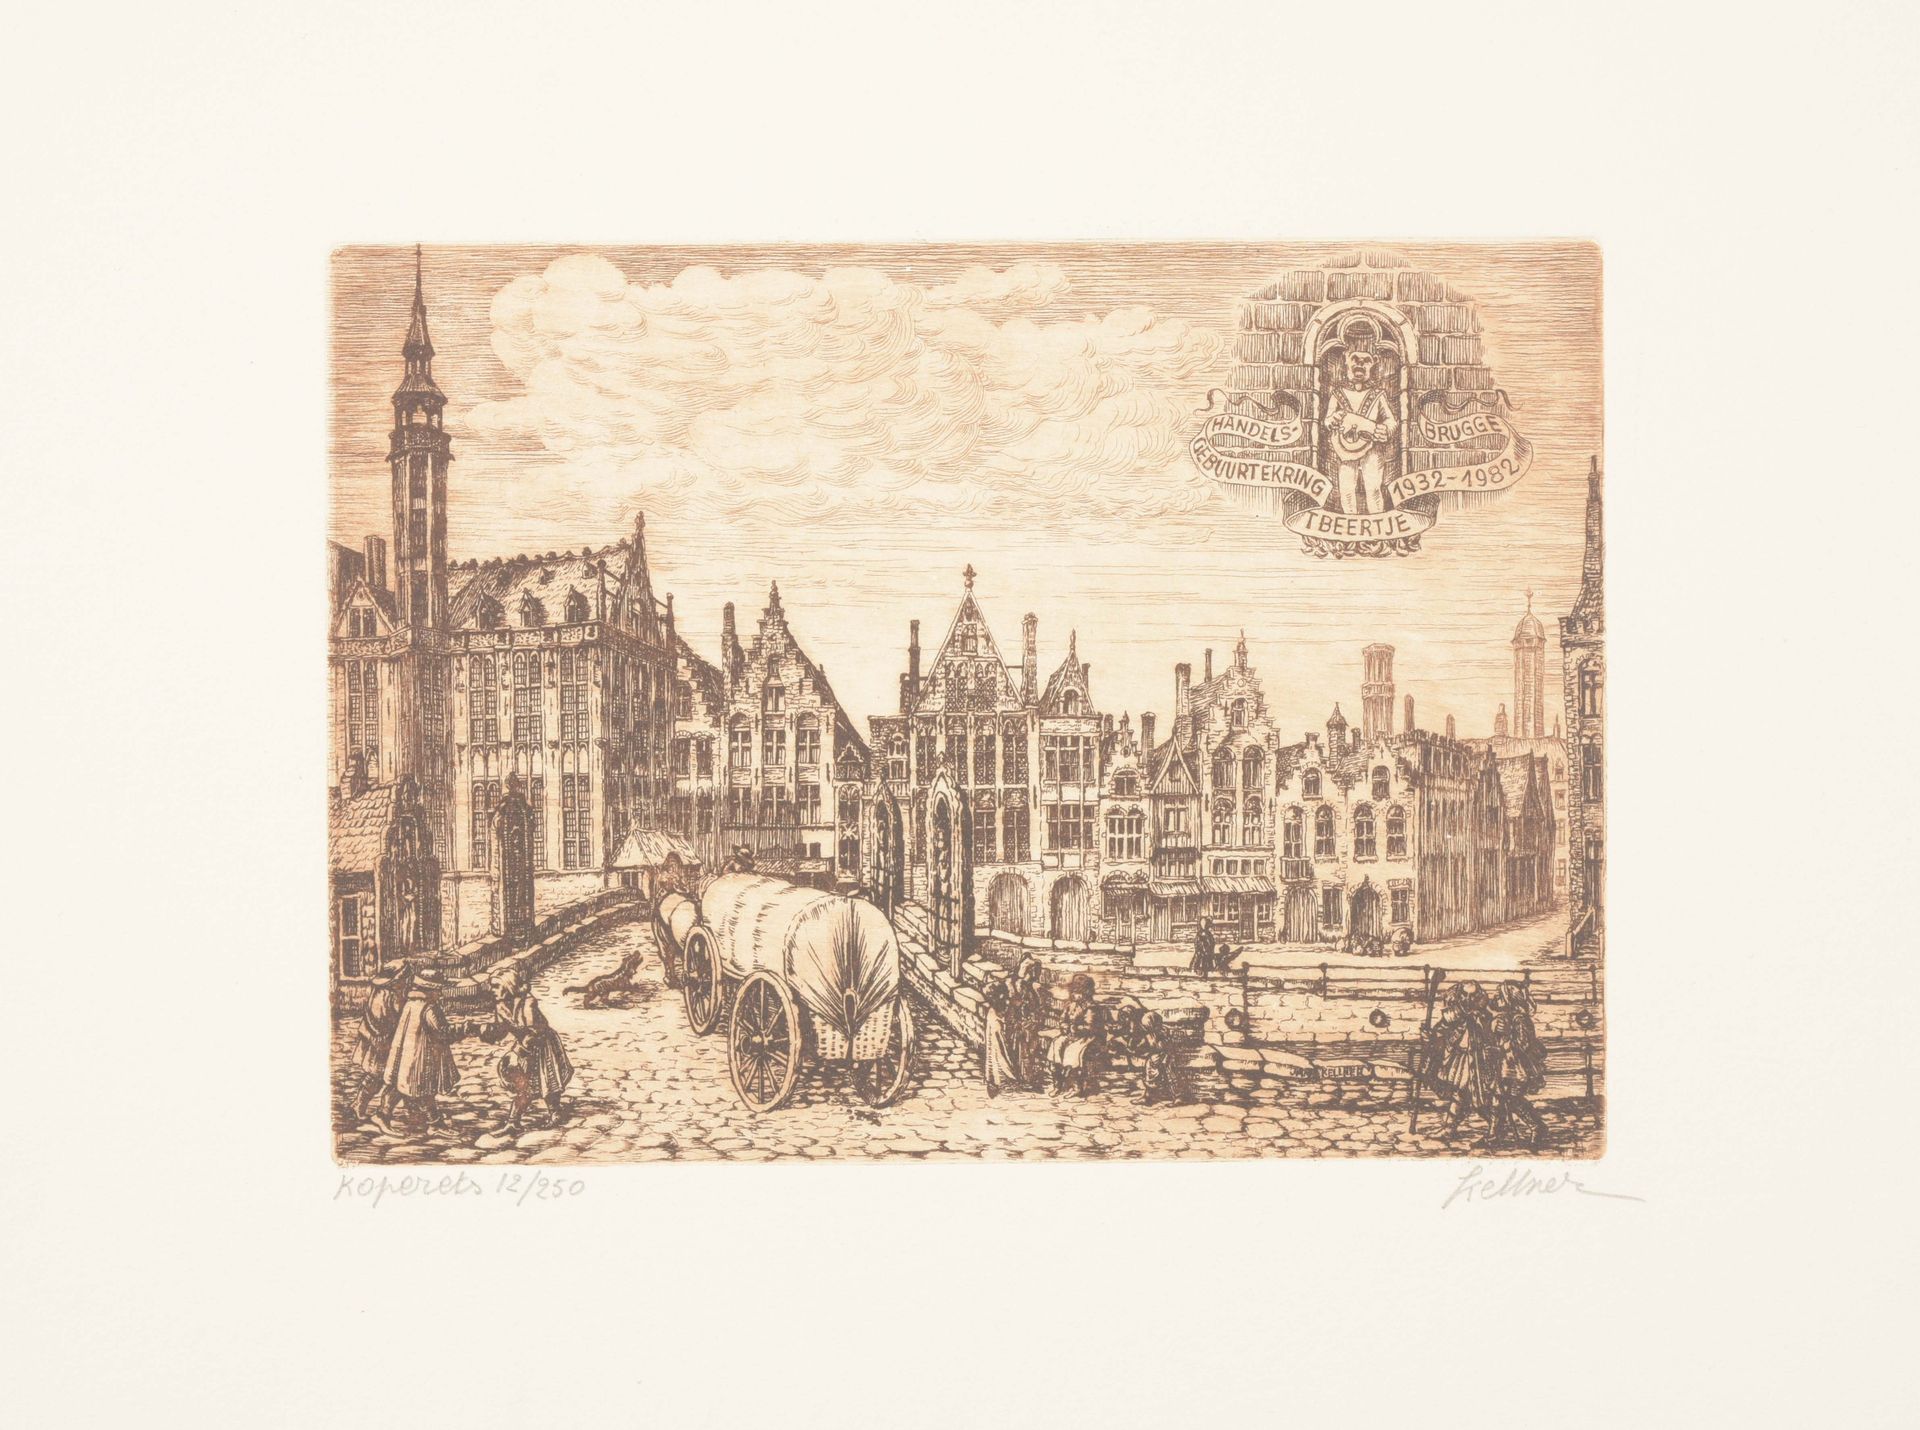 [Brugge] Groene Rei te Brugge

Un ejemplar (13 x 24 cm), del año 19 (¿1879?), de&hellip;